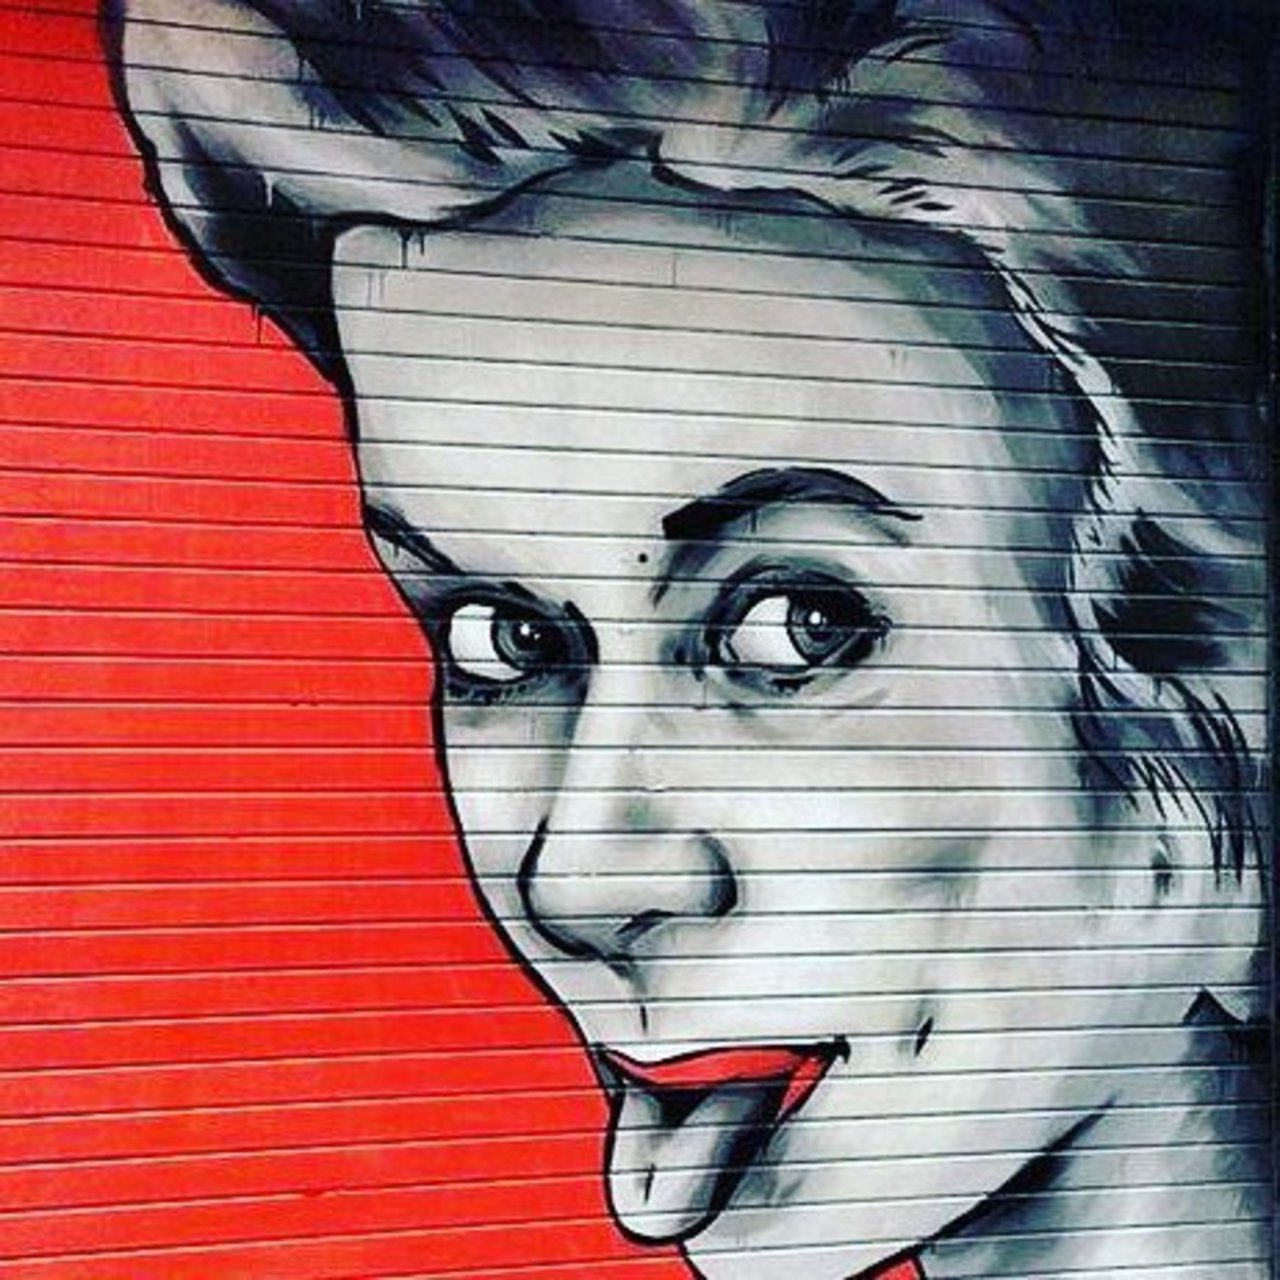 #zabouartist #streetart #art #graffiti #wallart #urbanart #zabou #londonstreetart #paris #streetartlondon #streetar… https://t.co/RJF1fhiNvd